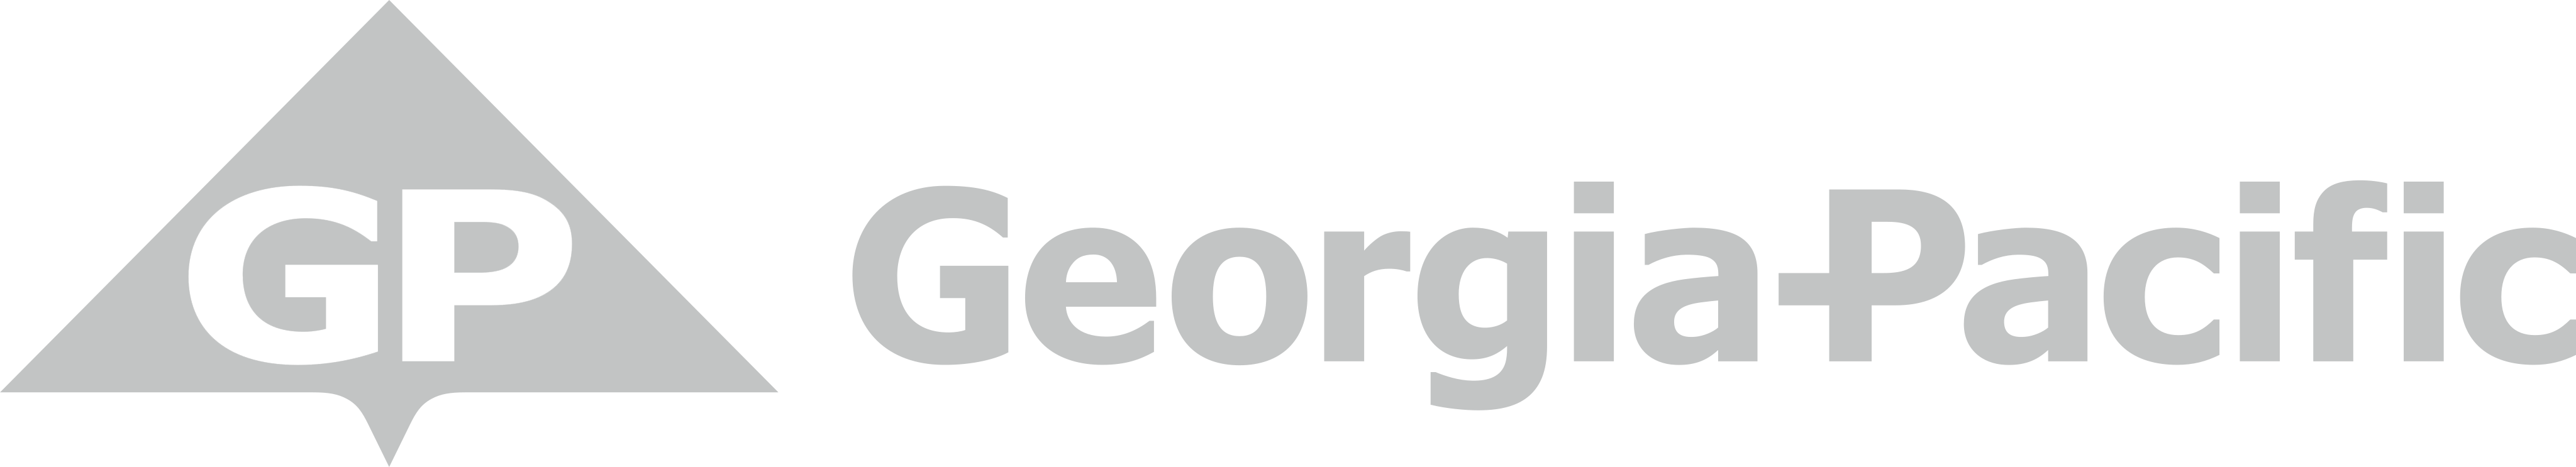 georgia-pacific-grey